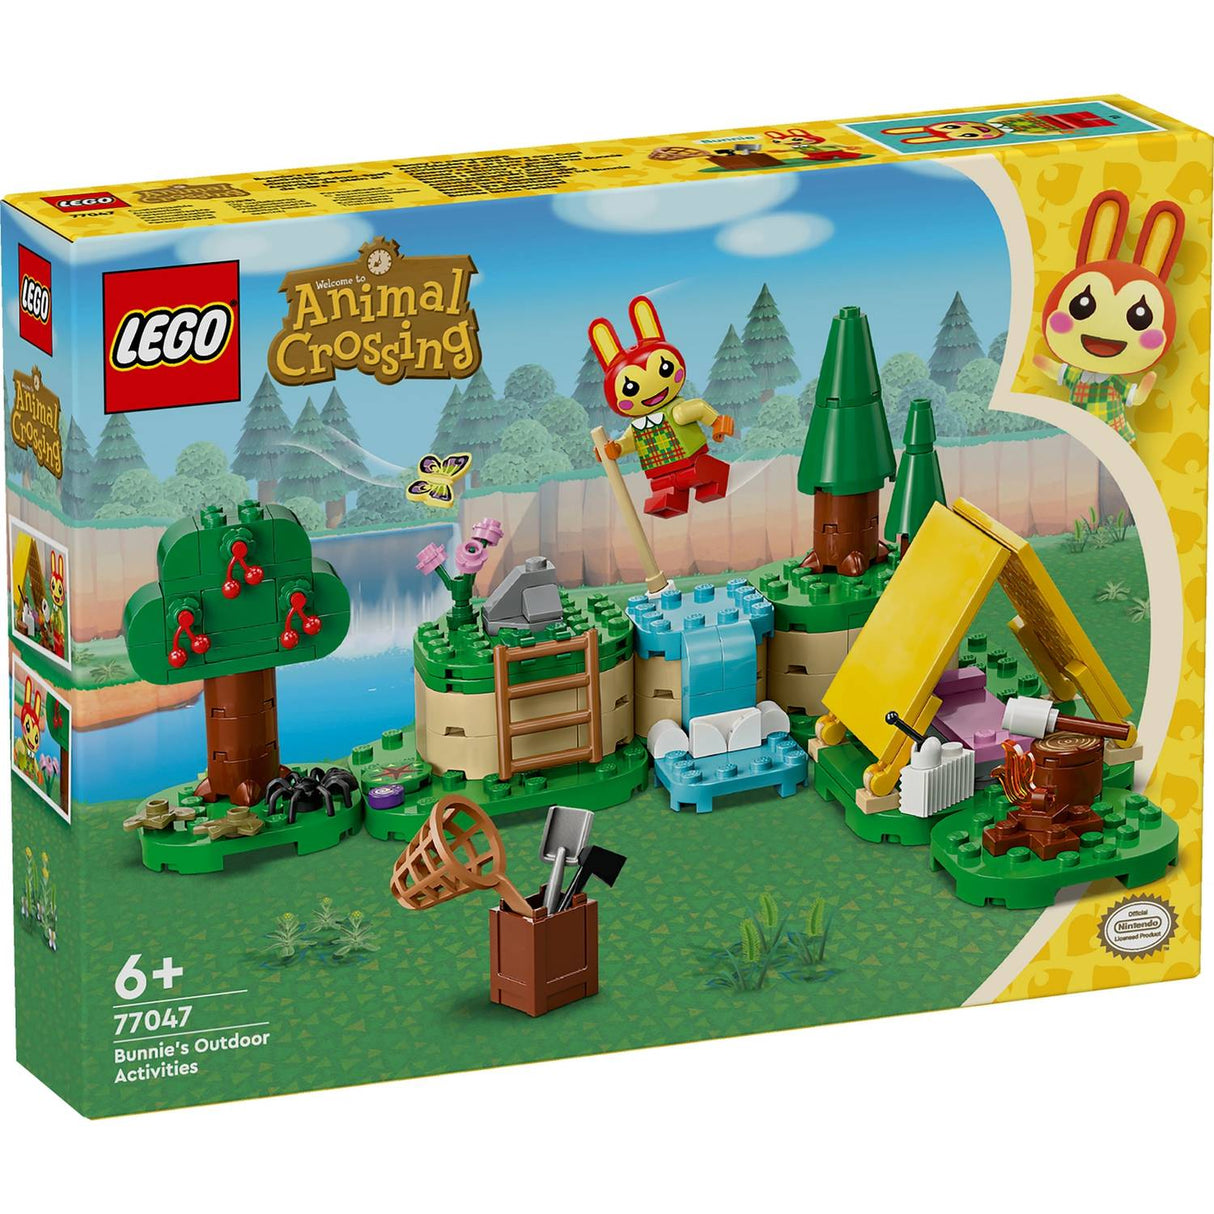 LEGO 77047 Animal Crossing: Bunnie's Outdoor Activities - Hobbytech Toys